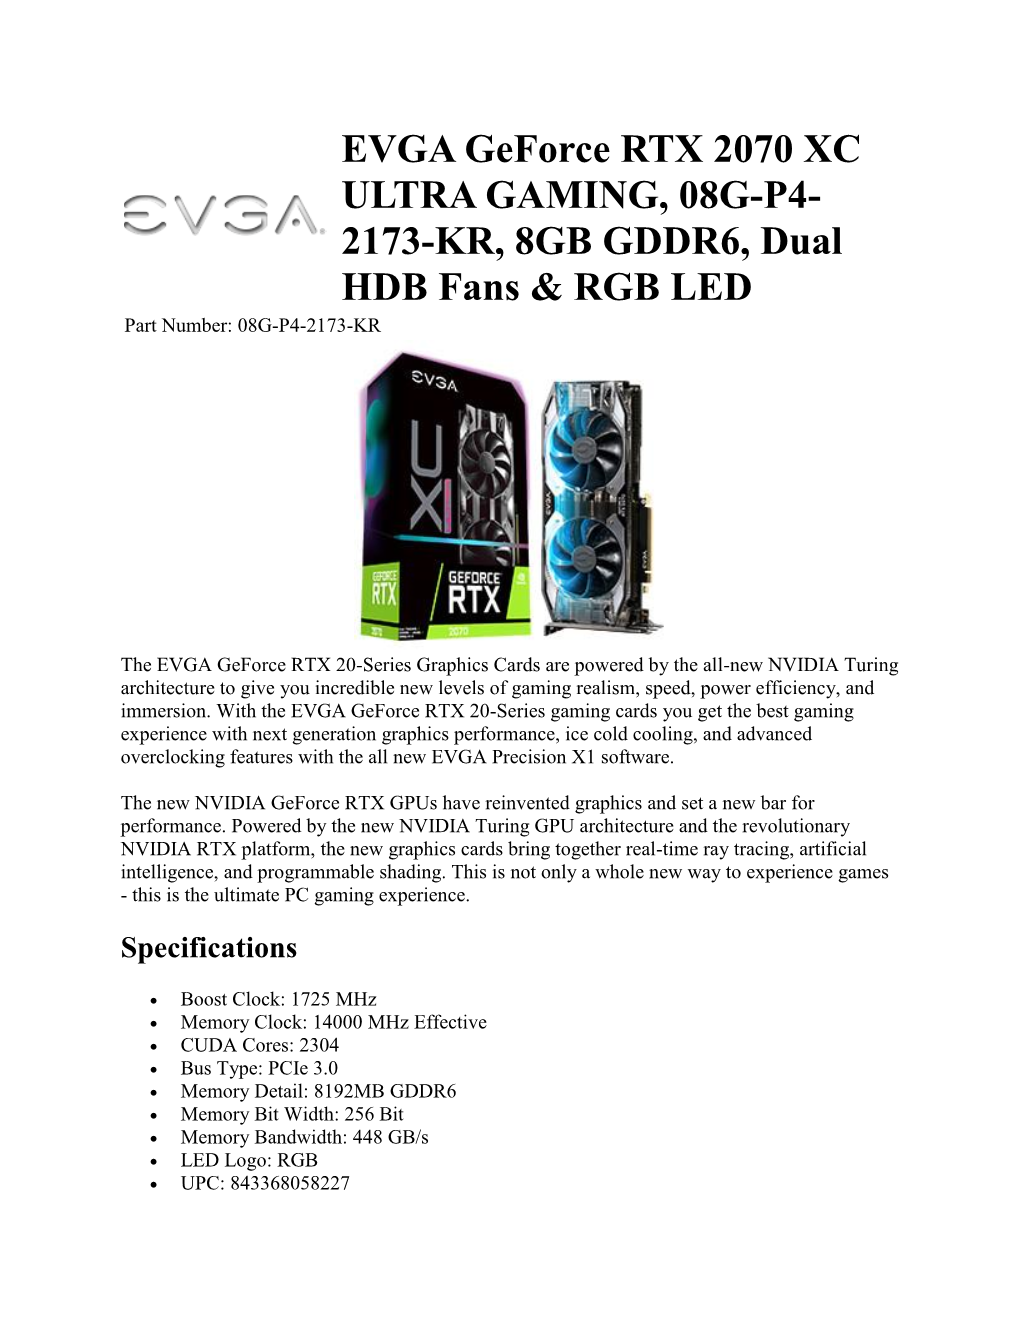 EVGA Geforce RTX 2070 XC ULTRA GAMING, 08G-P4- 2173-KR, 8GB GDDR6, Dual HDB Fans & RGB LED Part Number: 08G-P4-2173-KR